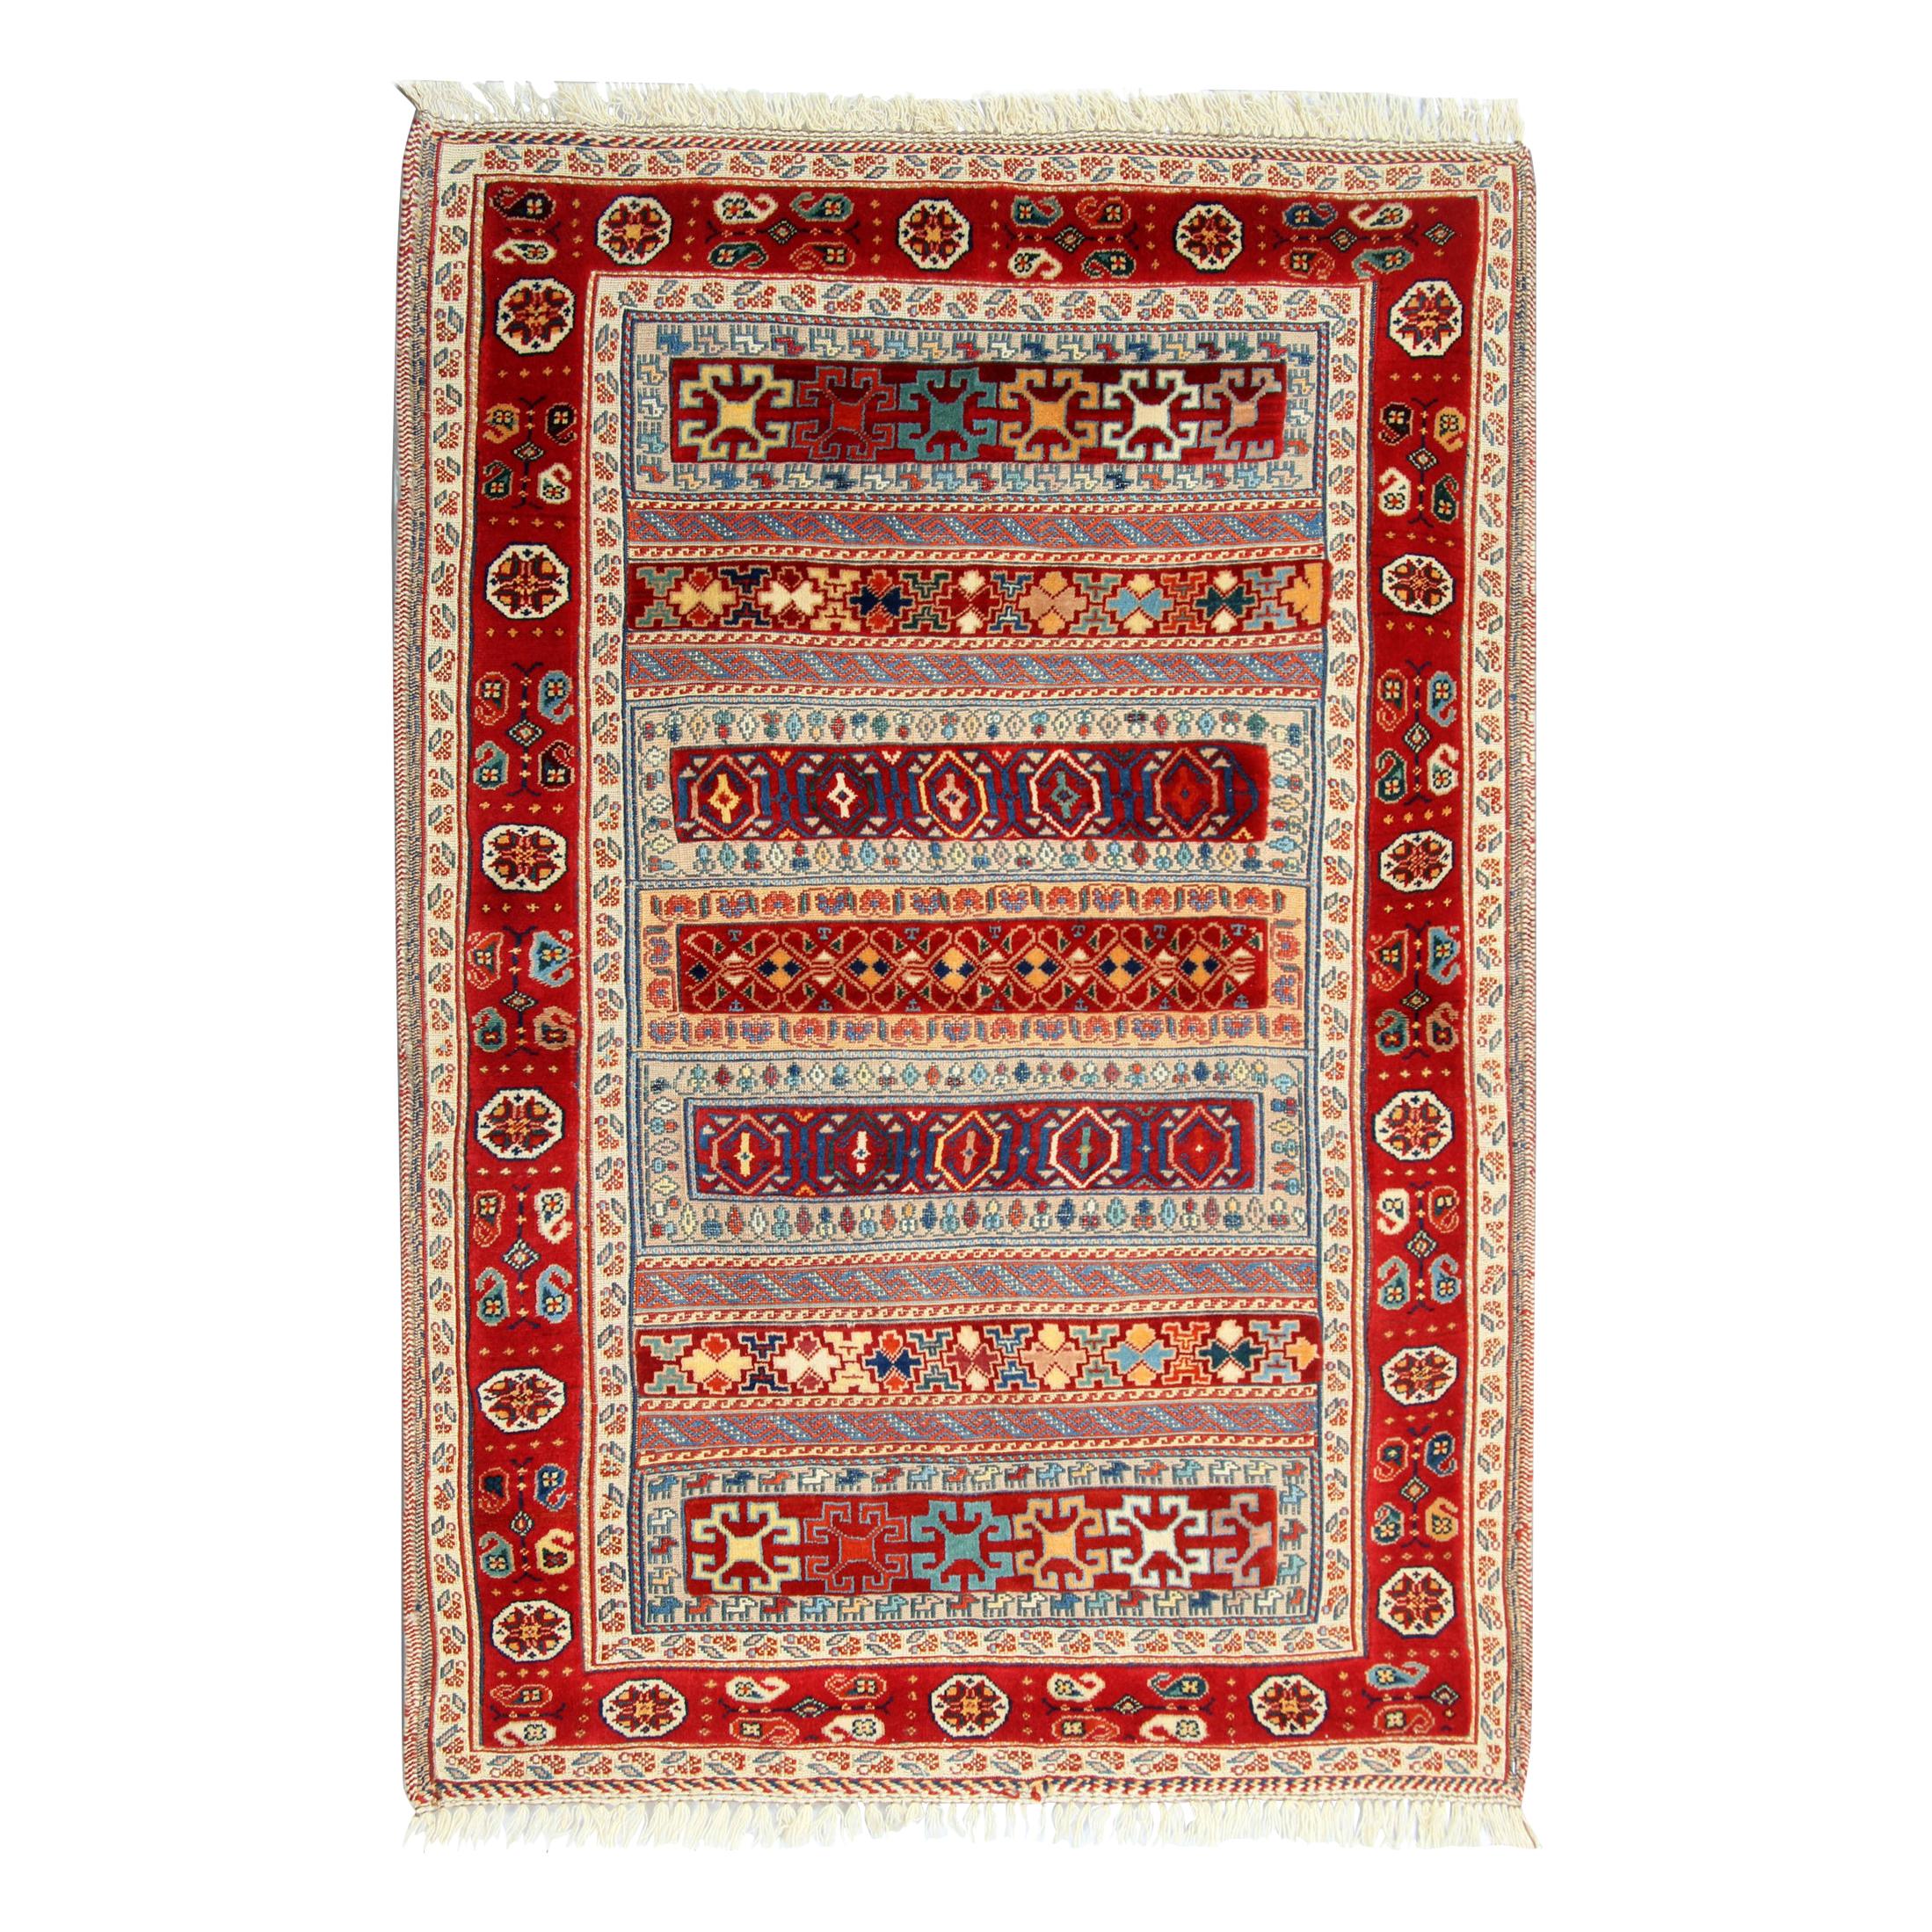 Traditional Kilim Carpet Wool Area Rug, Handwoven Sumakh Kilim Rug